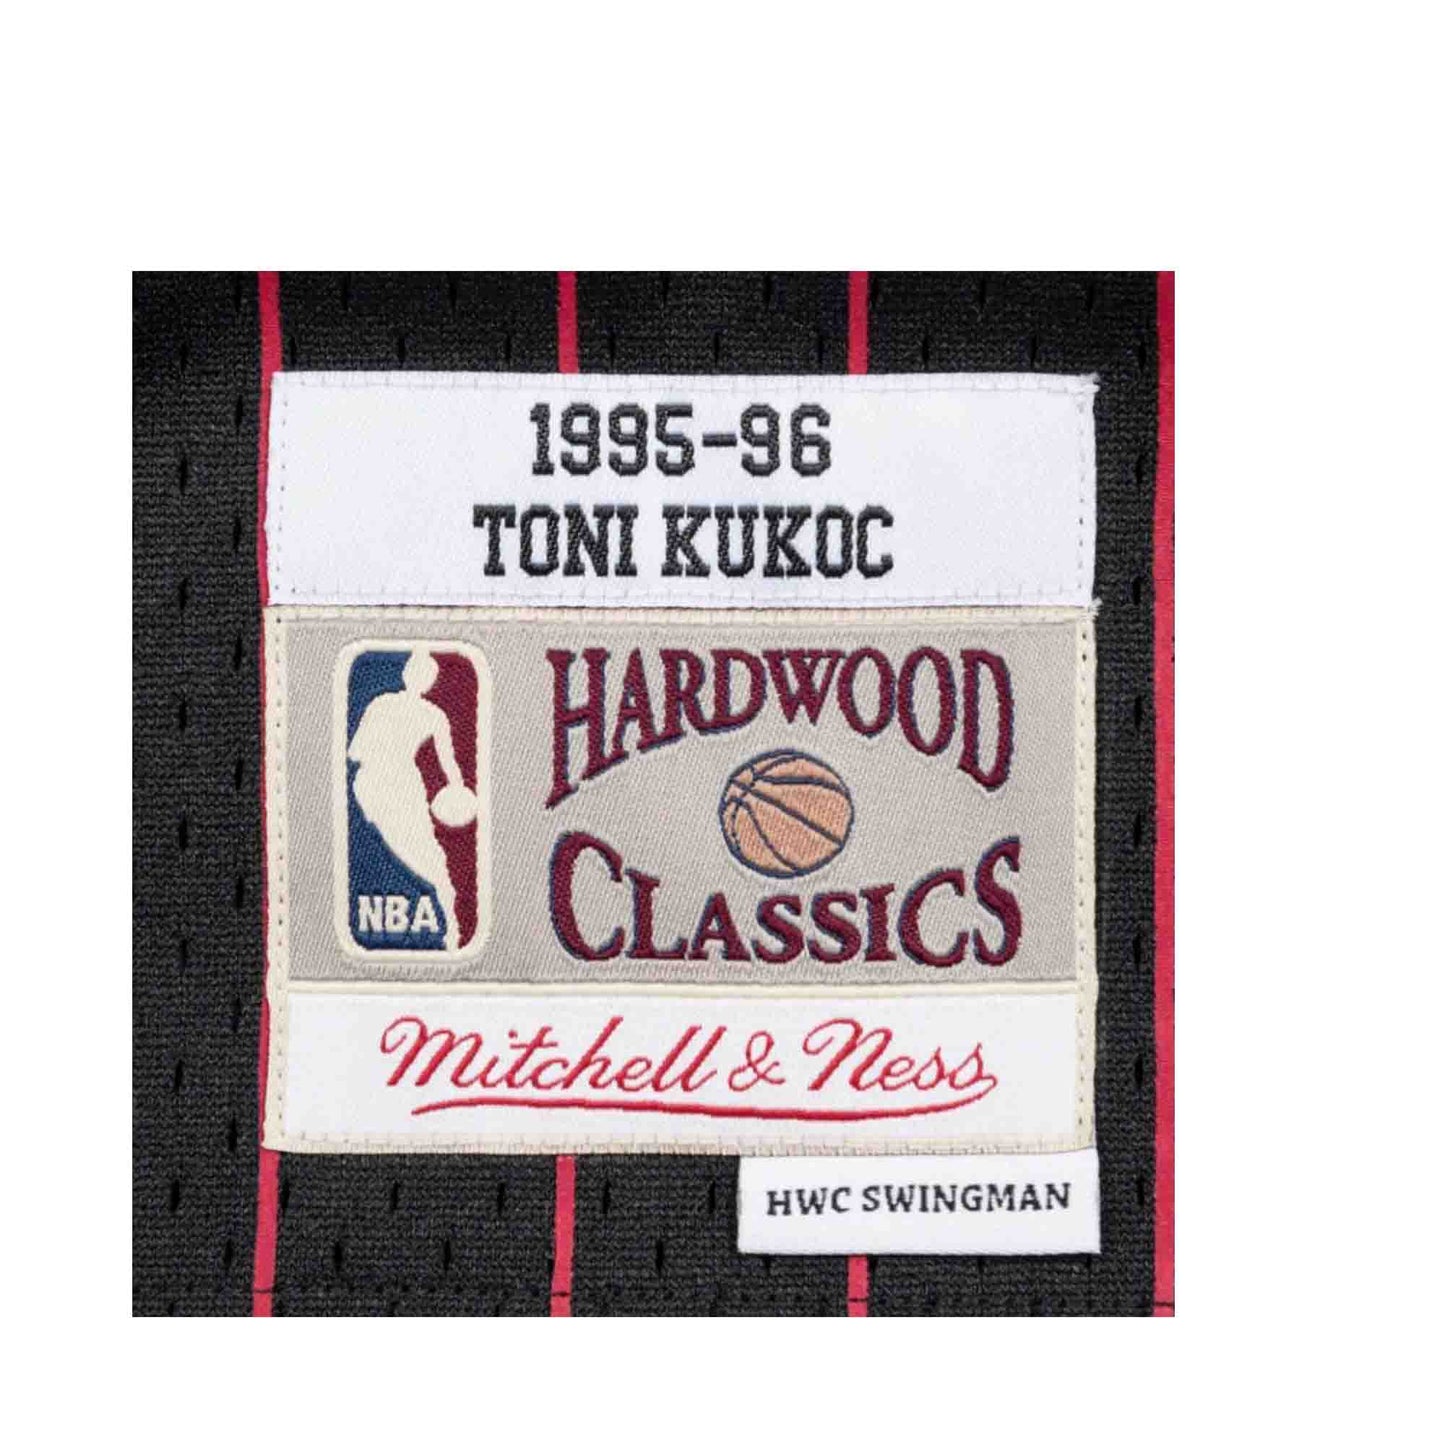 NBA Swingman Jersey Chicago Bulls 1995-96 Toni Kukoc #7